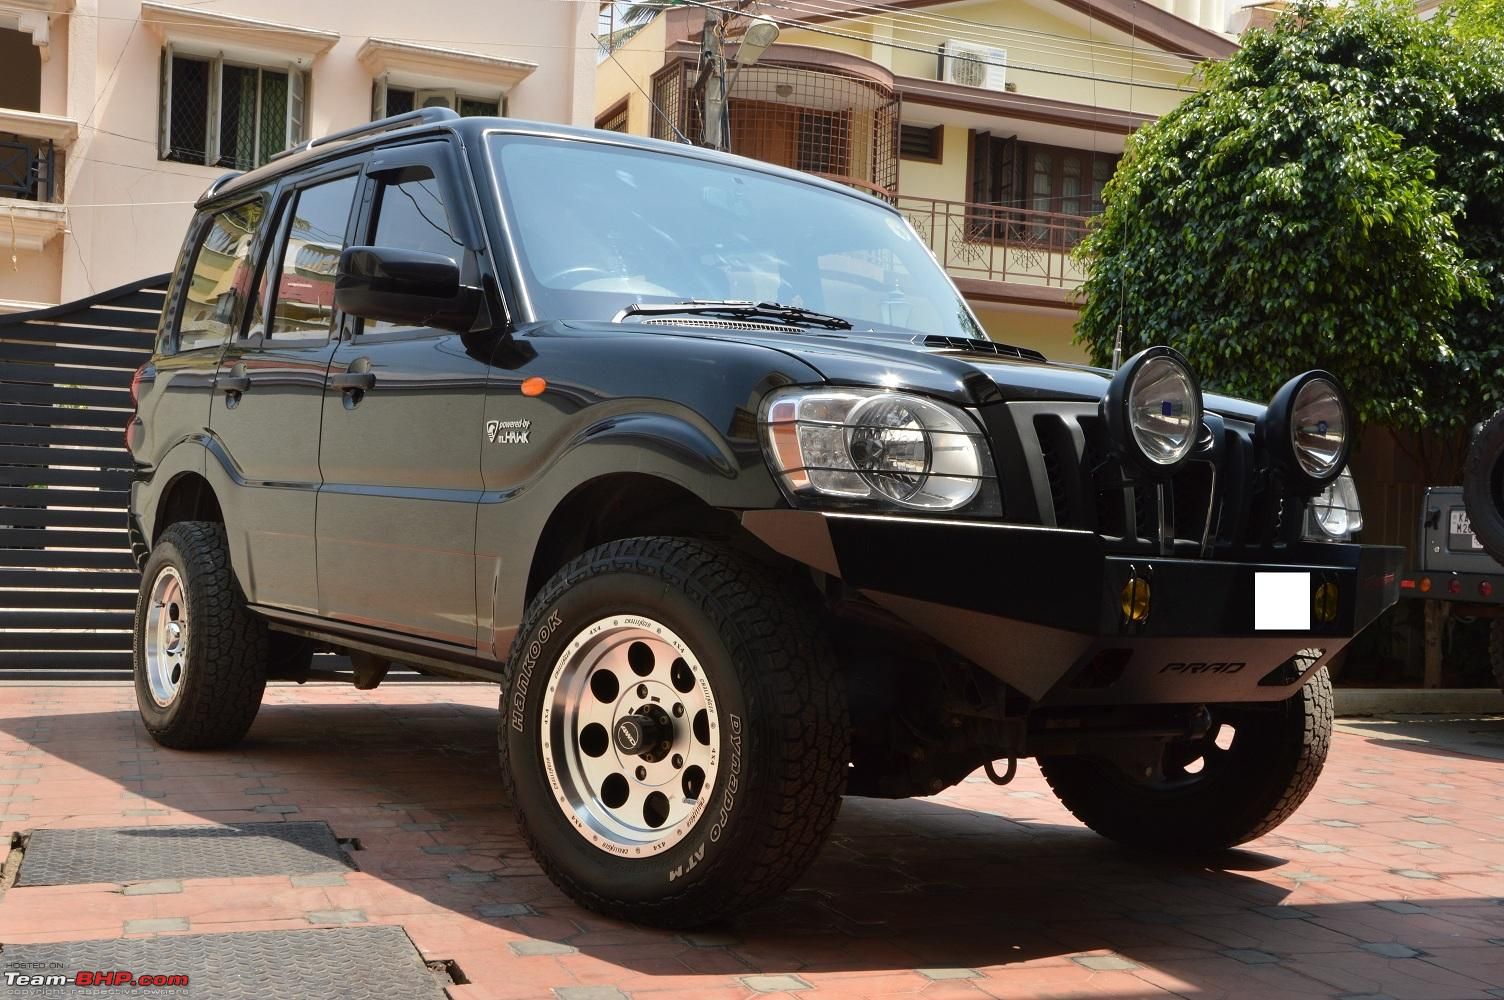 Modified Scorpio Cars In India